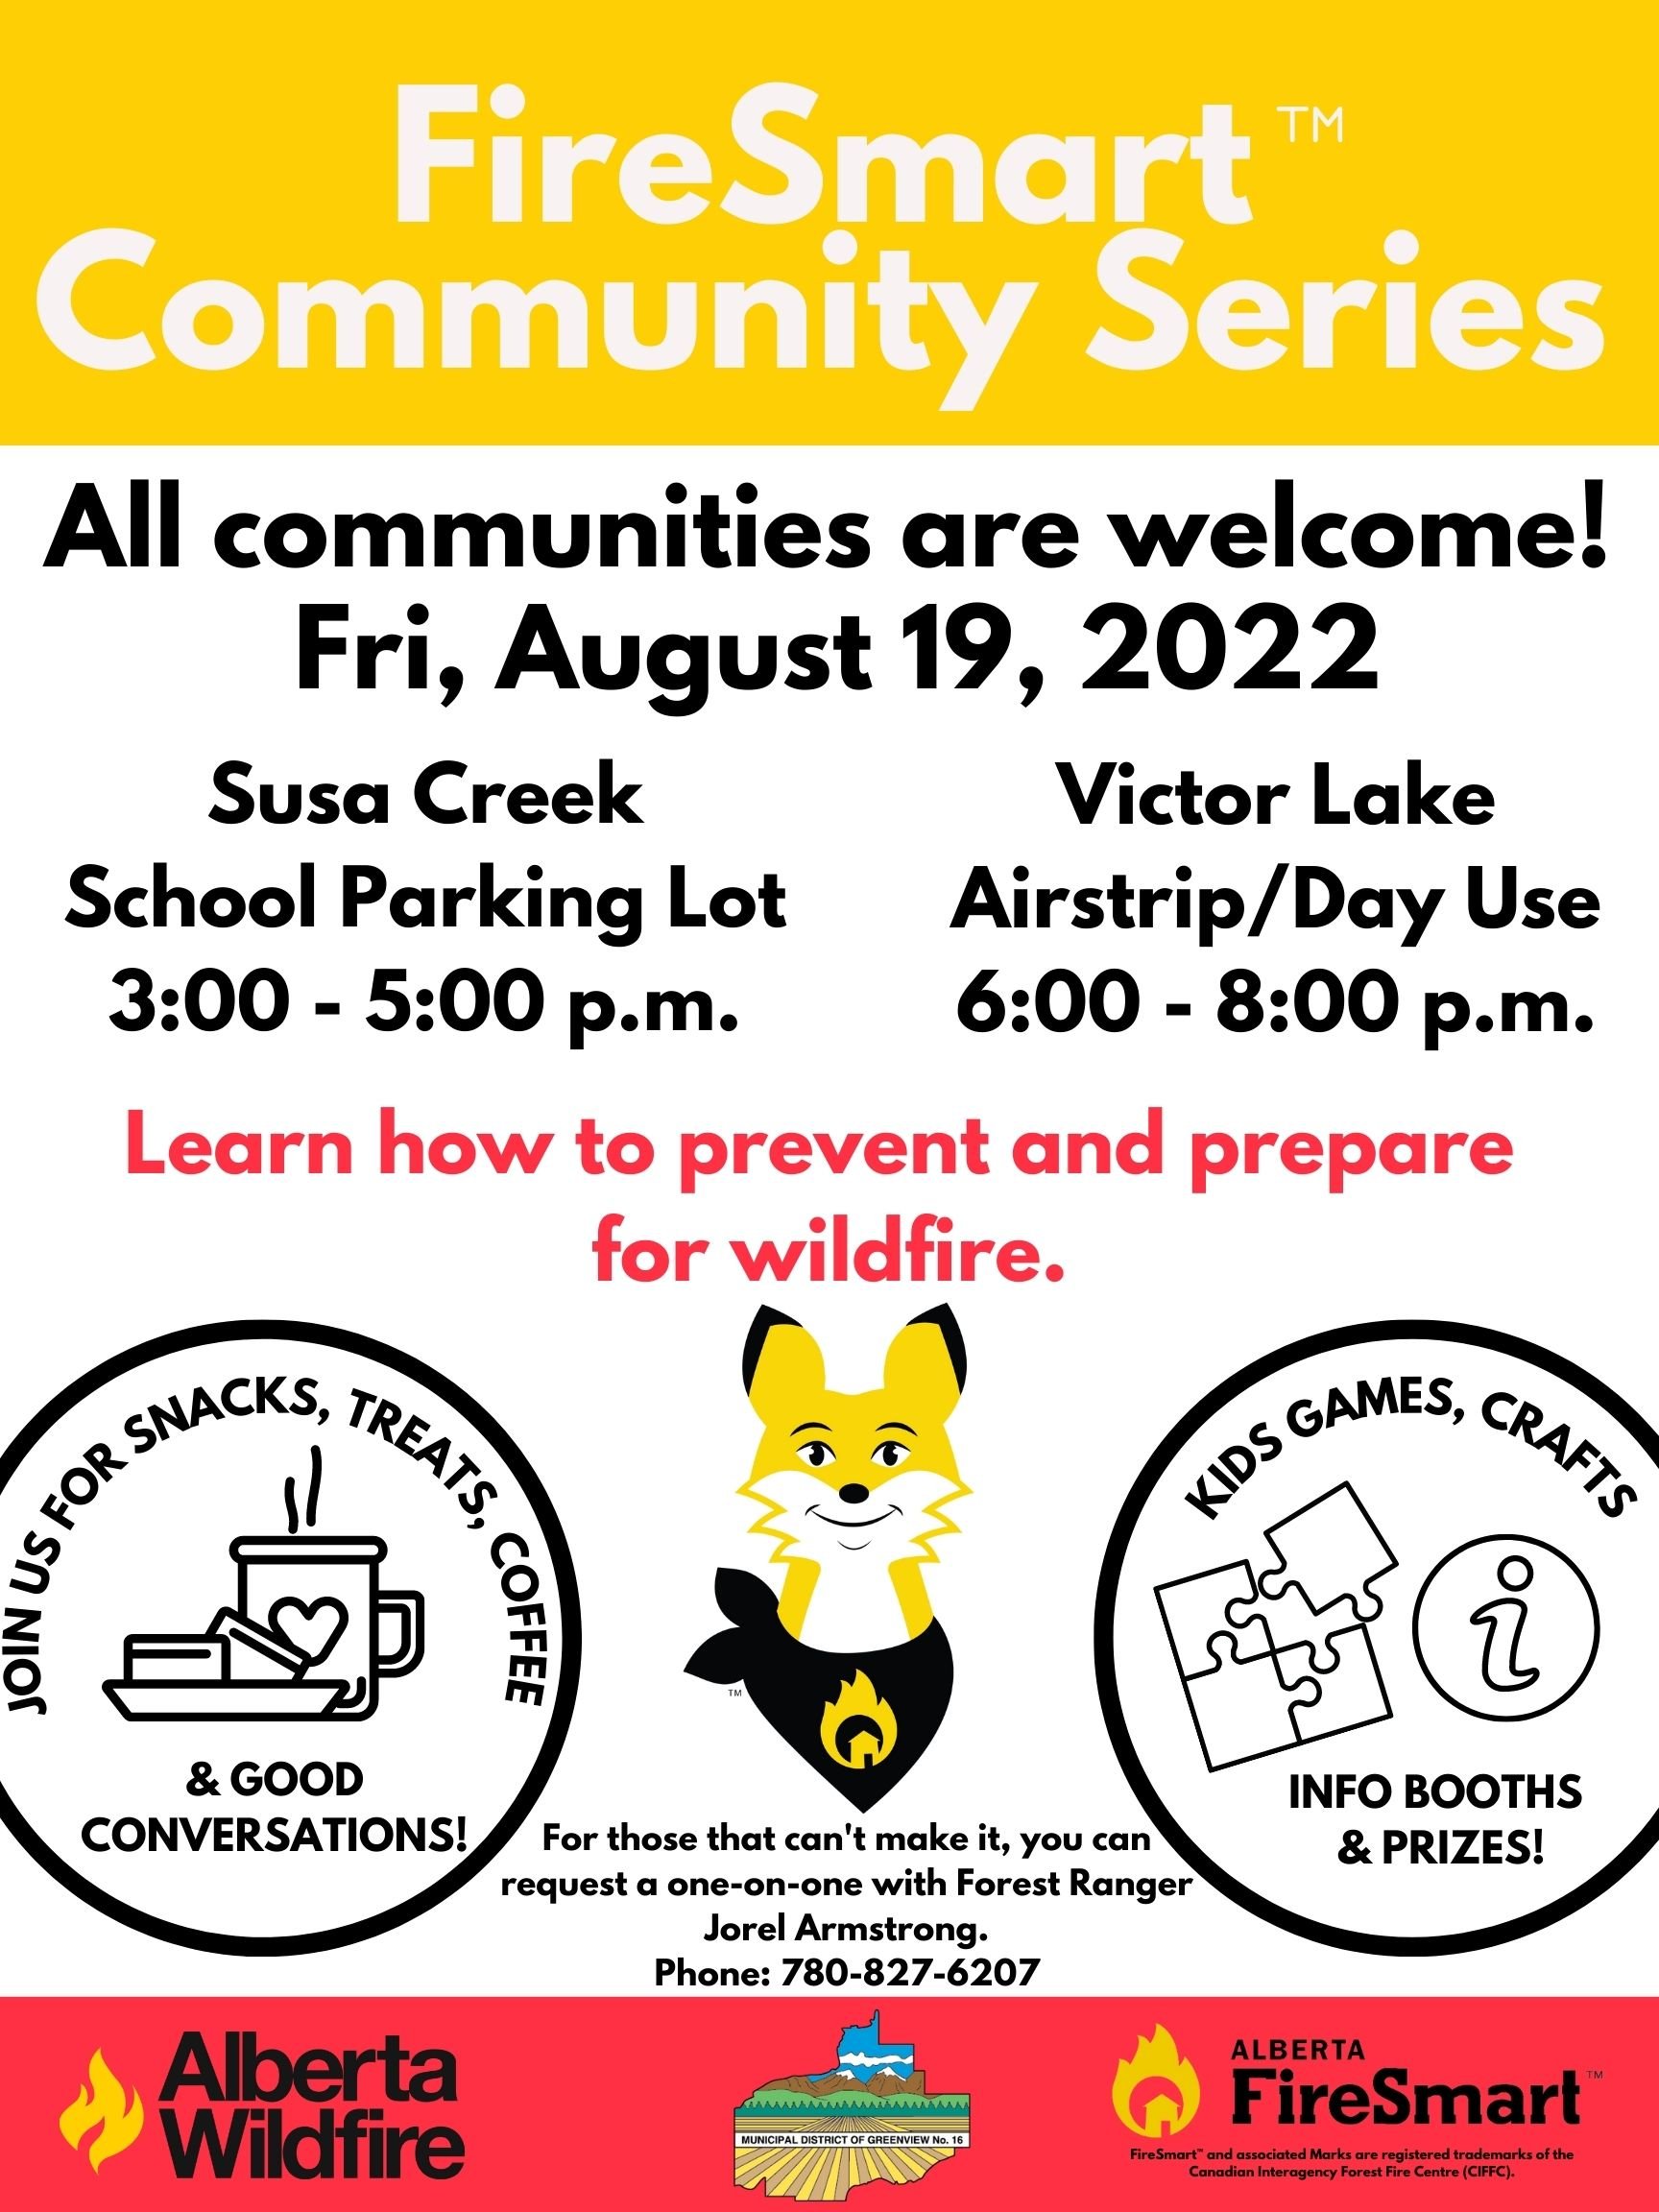 FireSmart Community Series Poster - Victor Lake Susa Creek Aug 19, 2022 